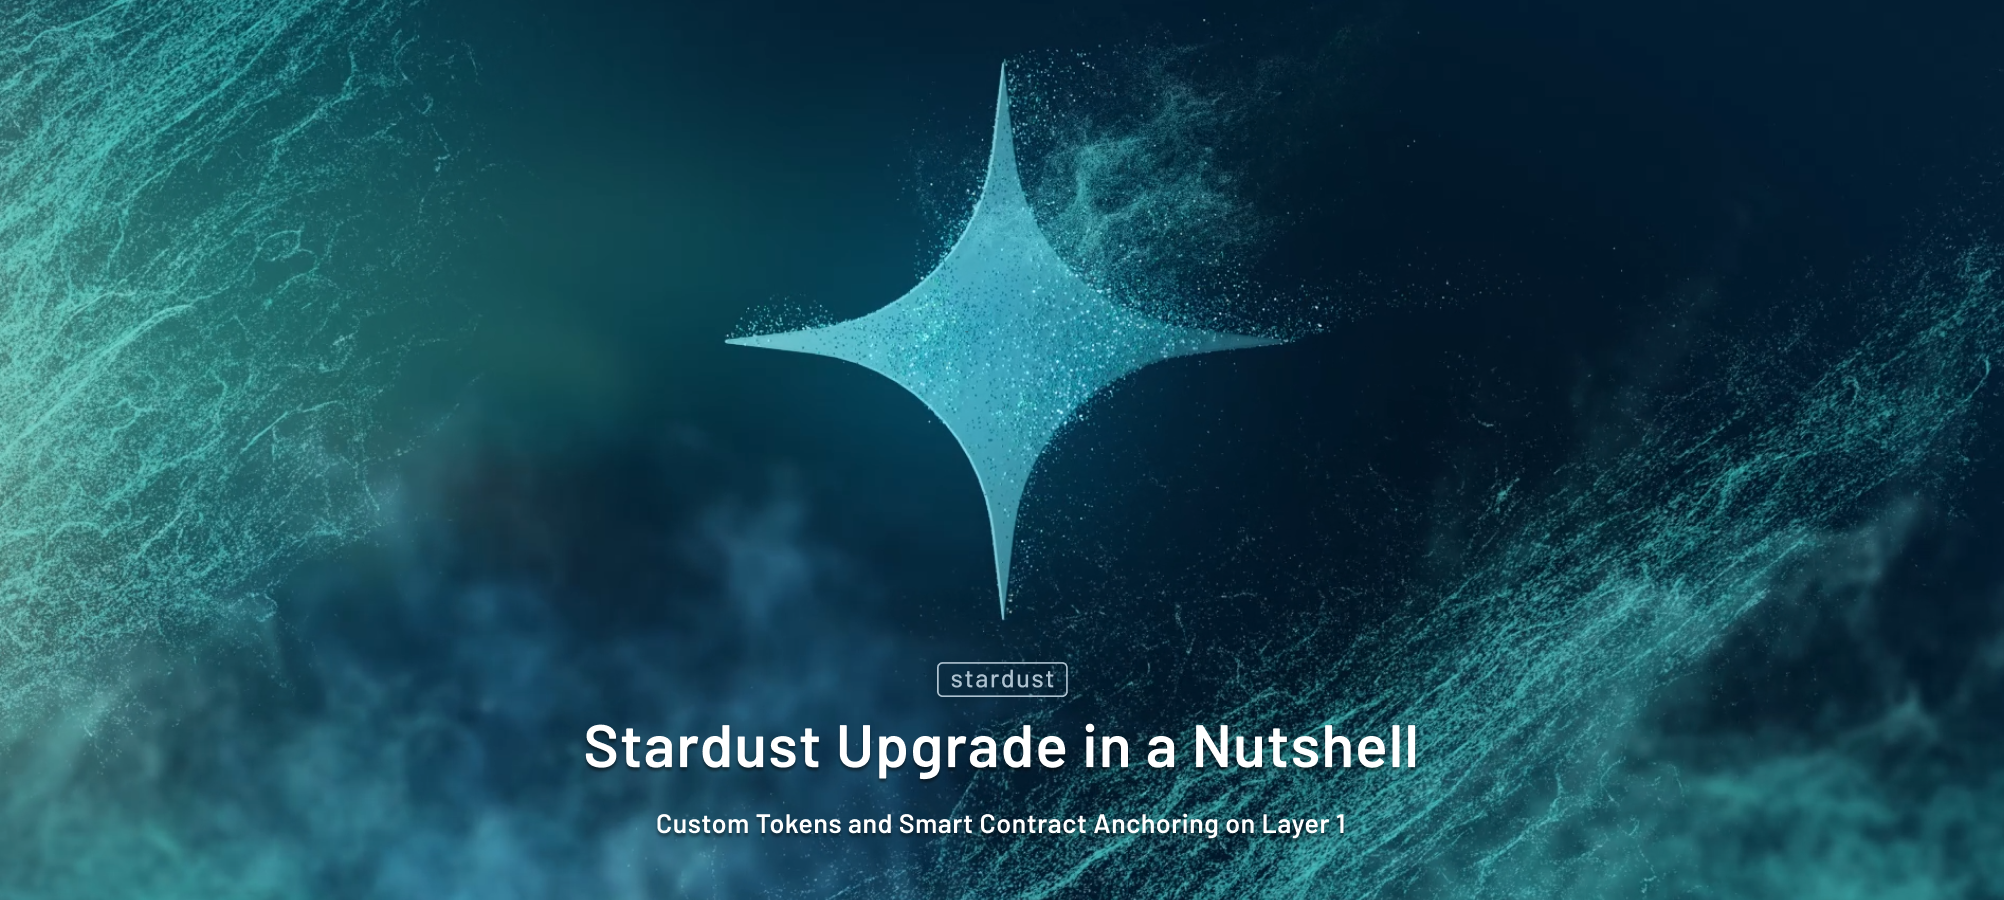 Stardust Upgrade in a Nutshell